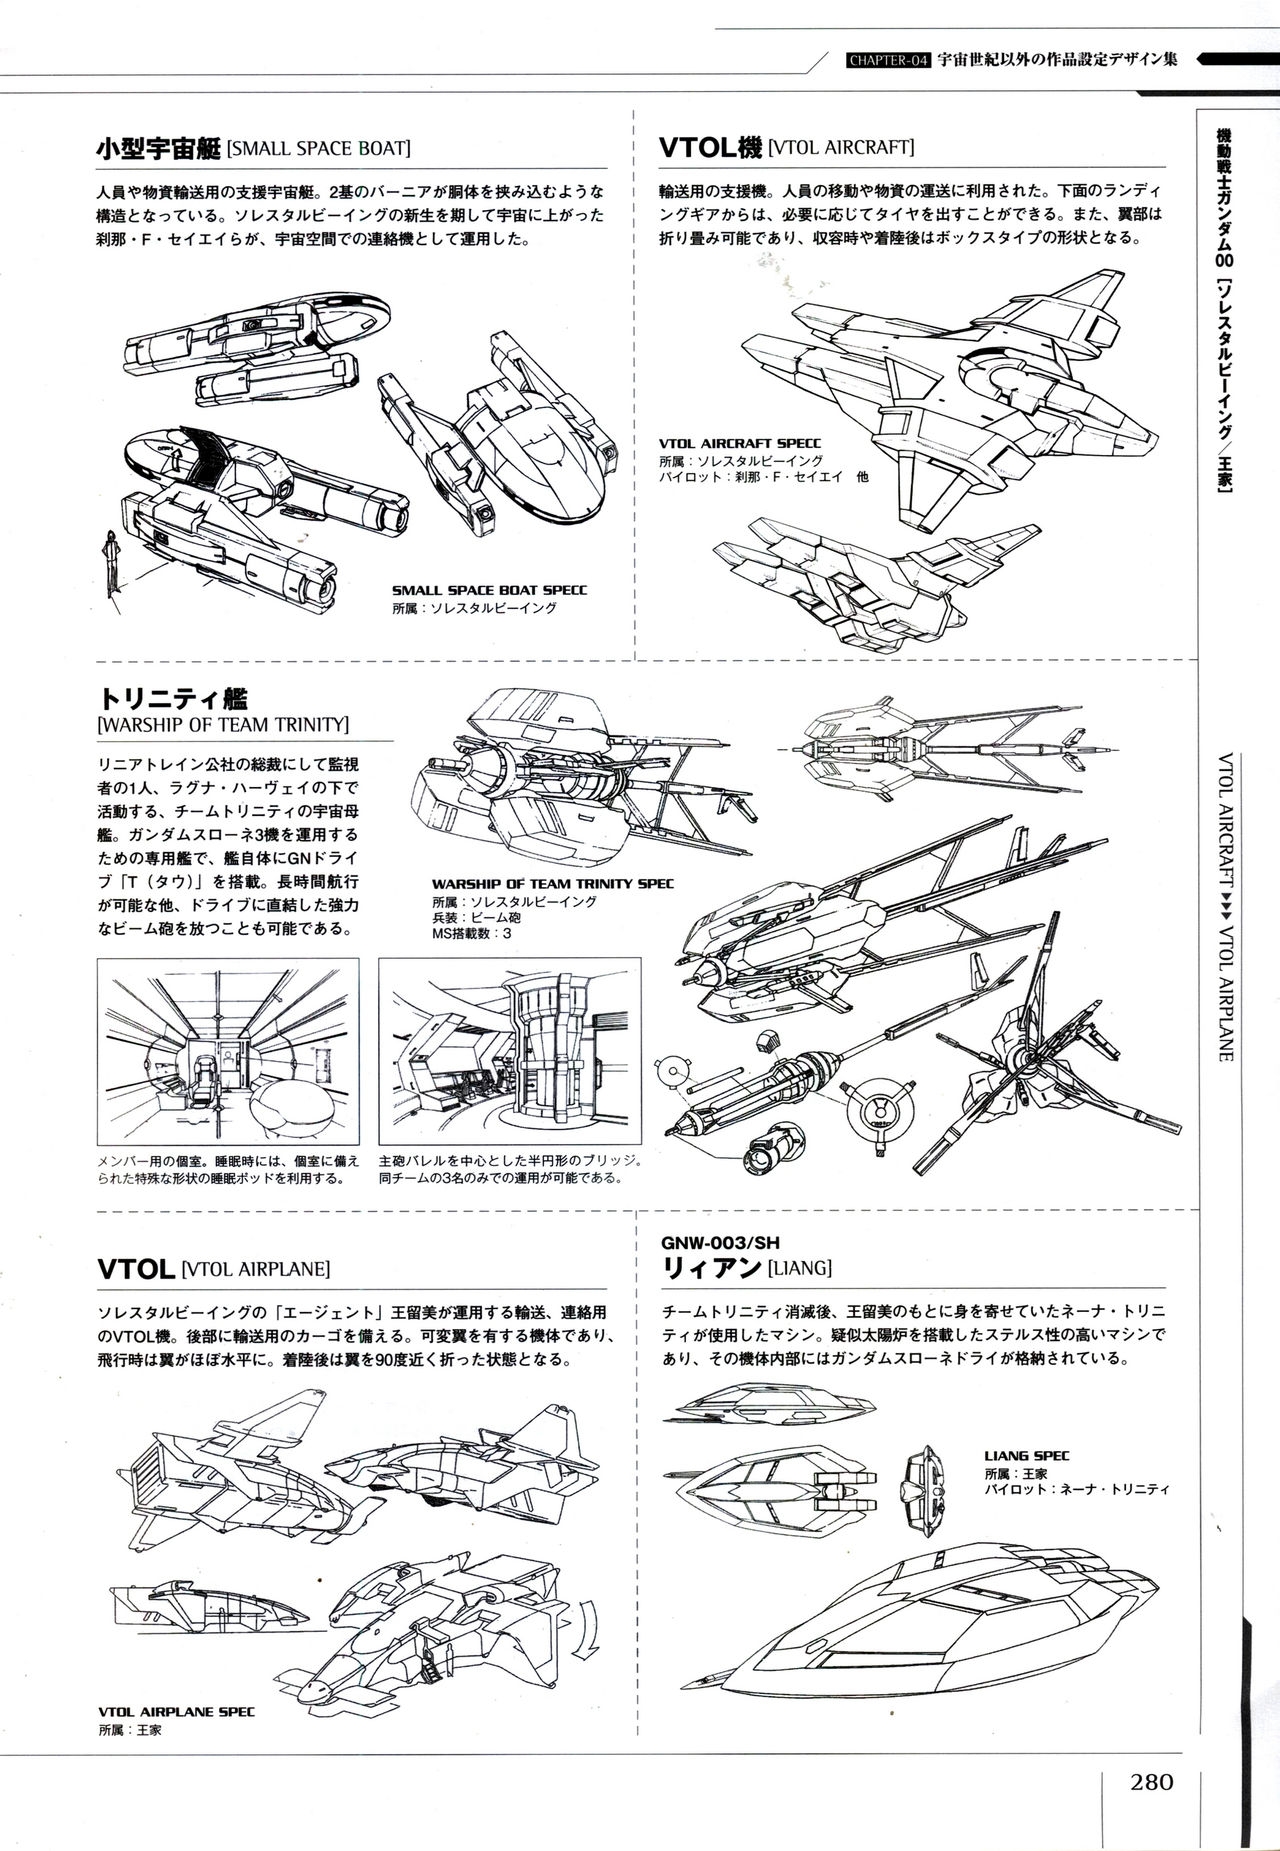 Mobile Suit Gundam - Ship & Aerospace Plane Encyclopedia - Revised Edition 285